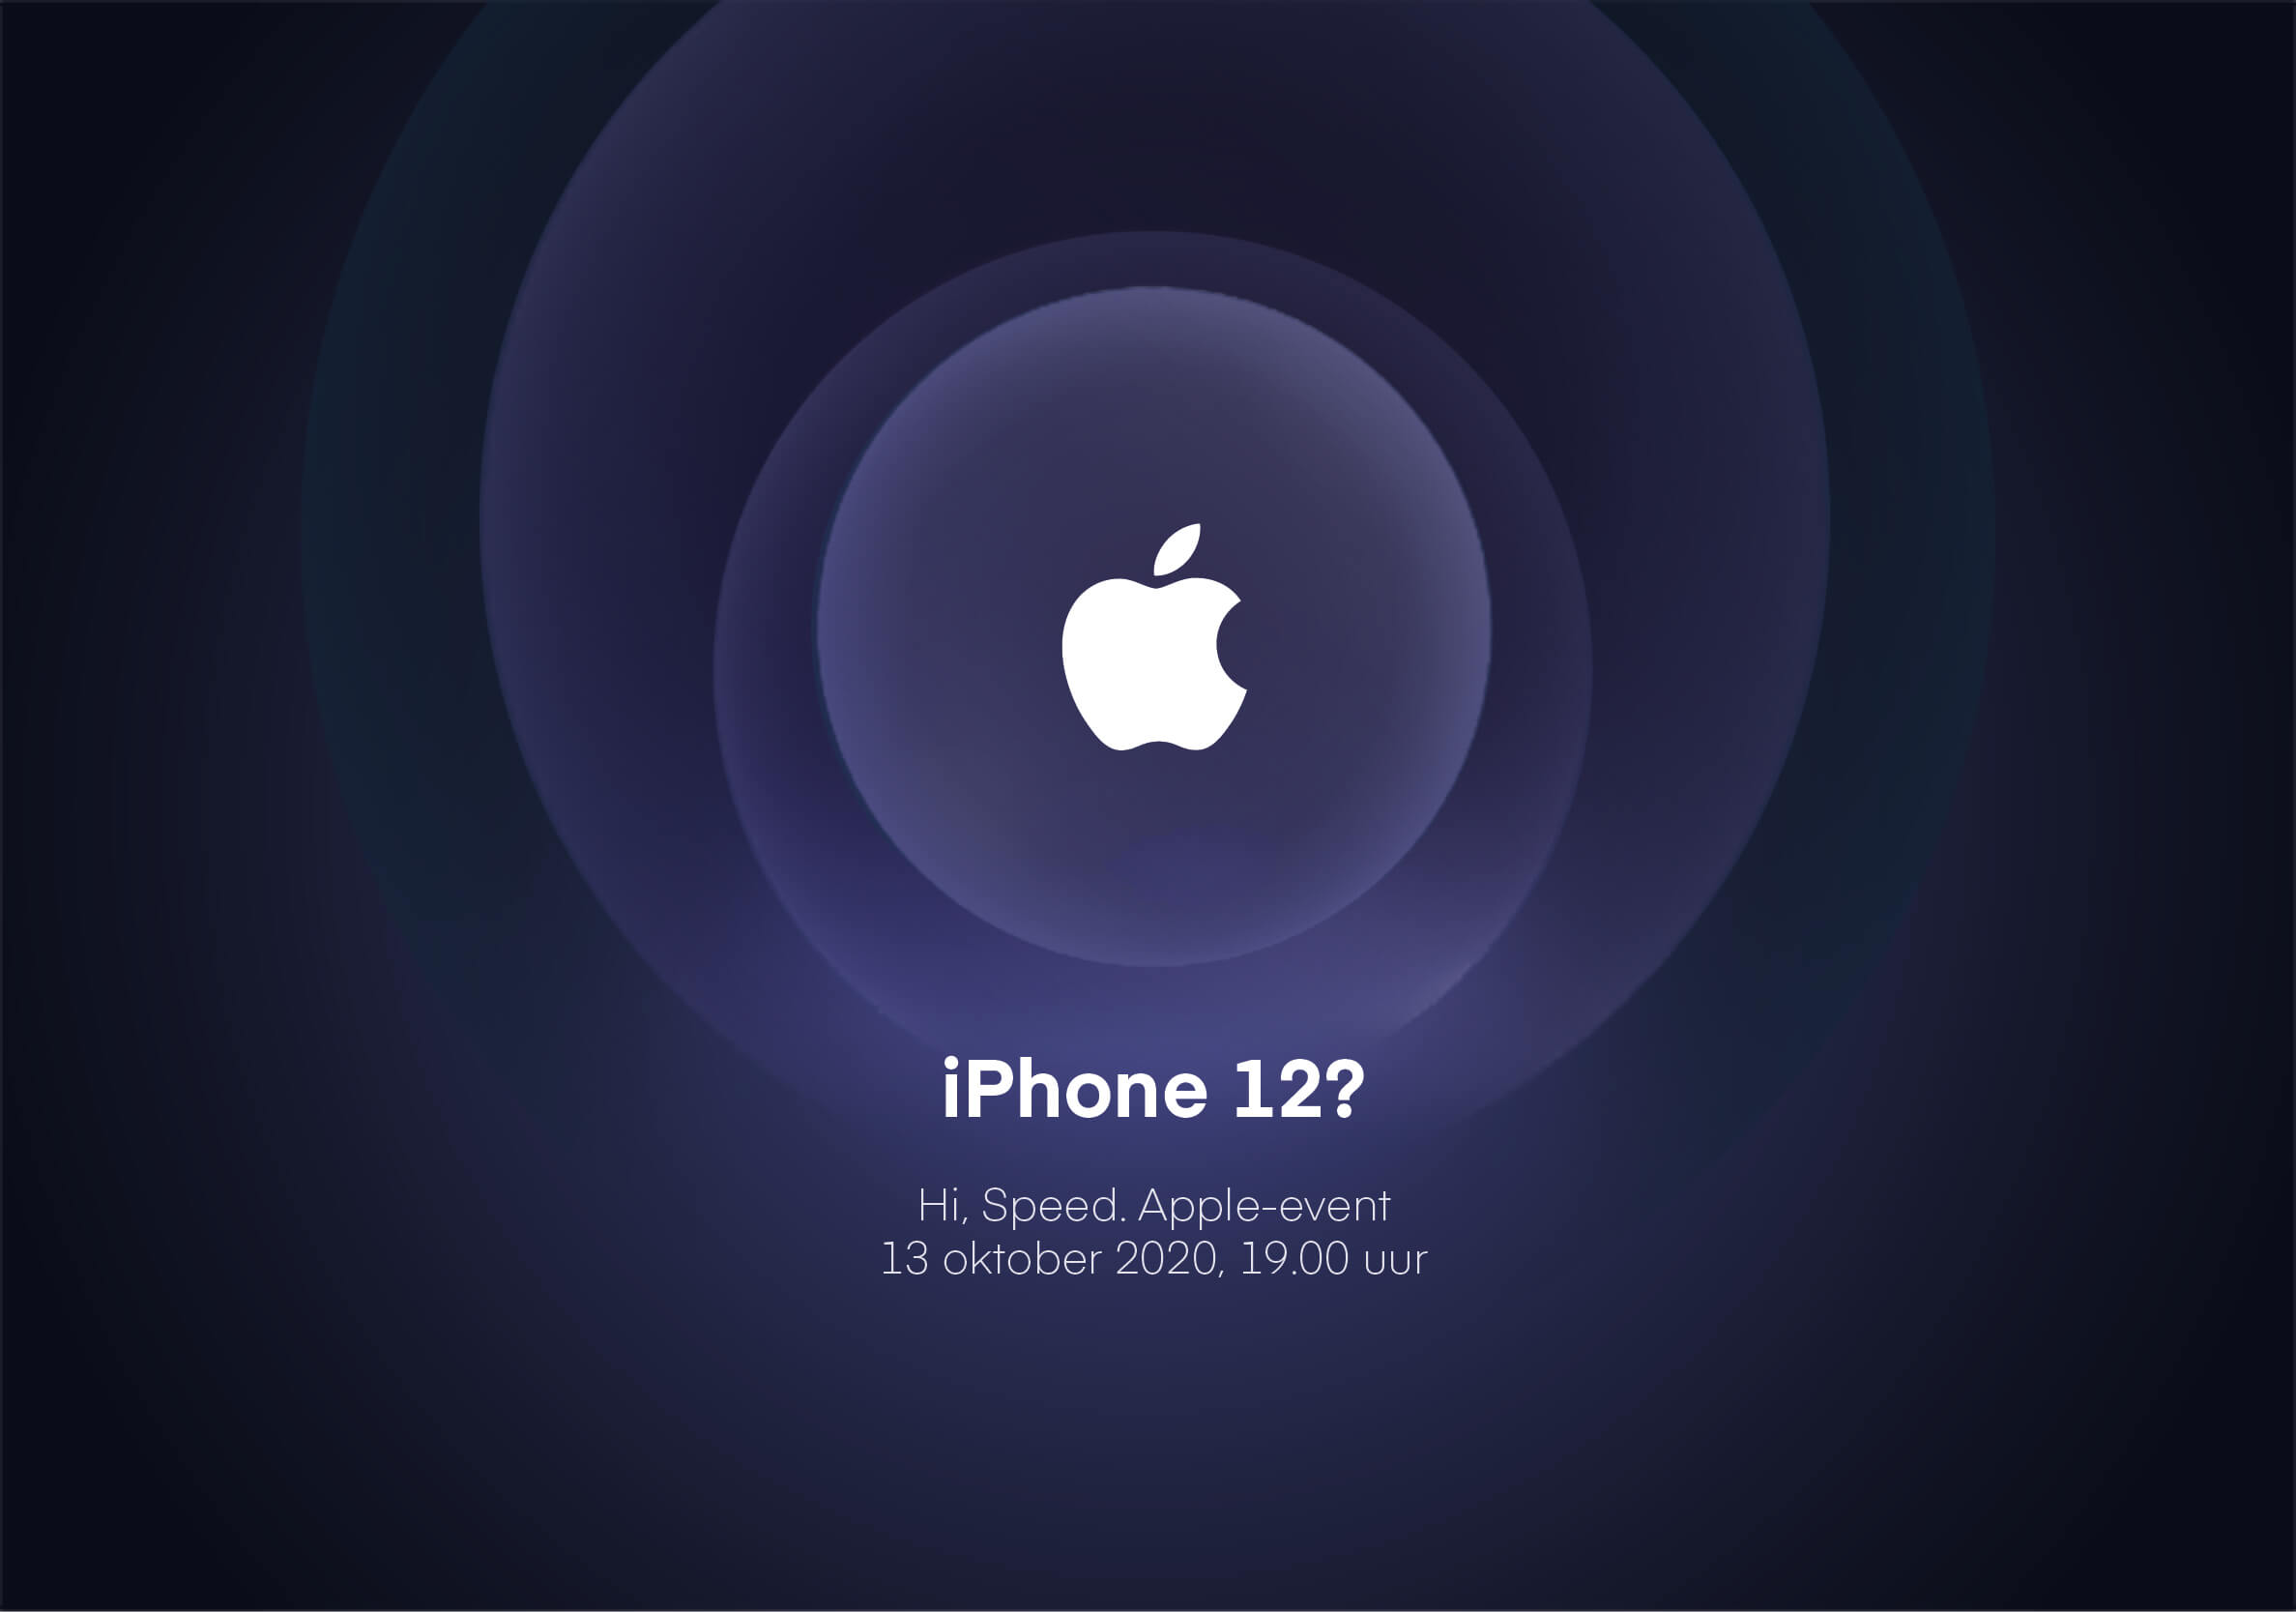 iPhone 12-geruchten